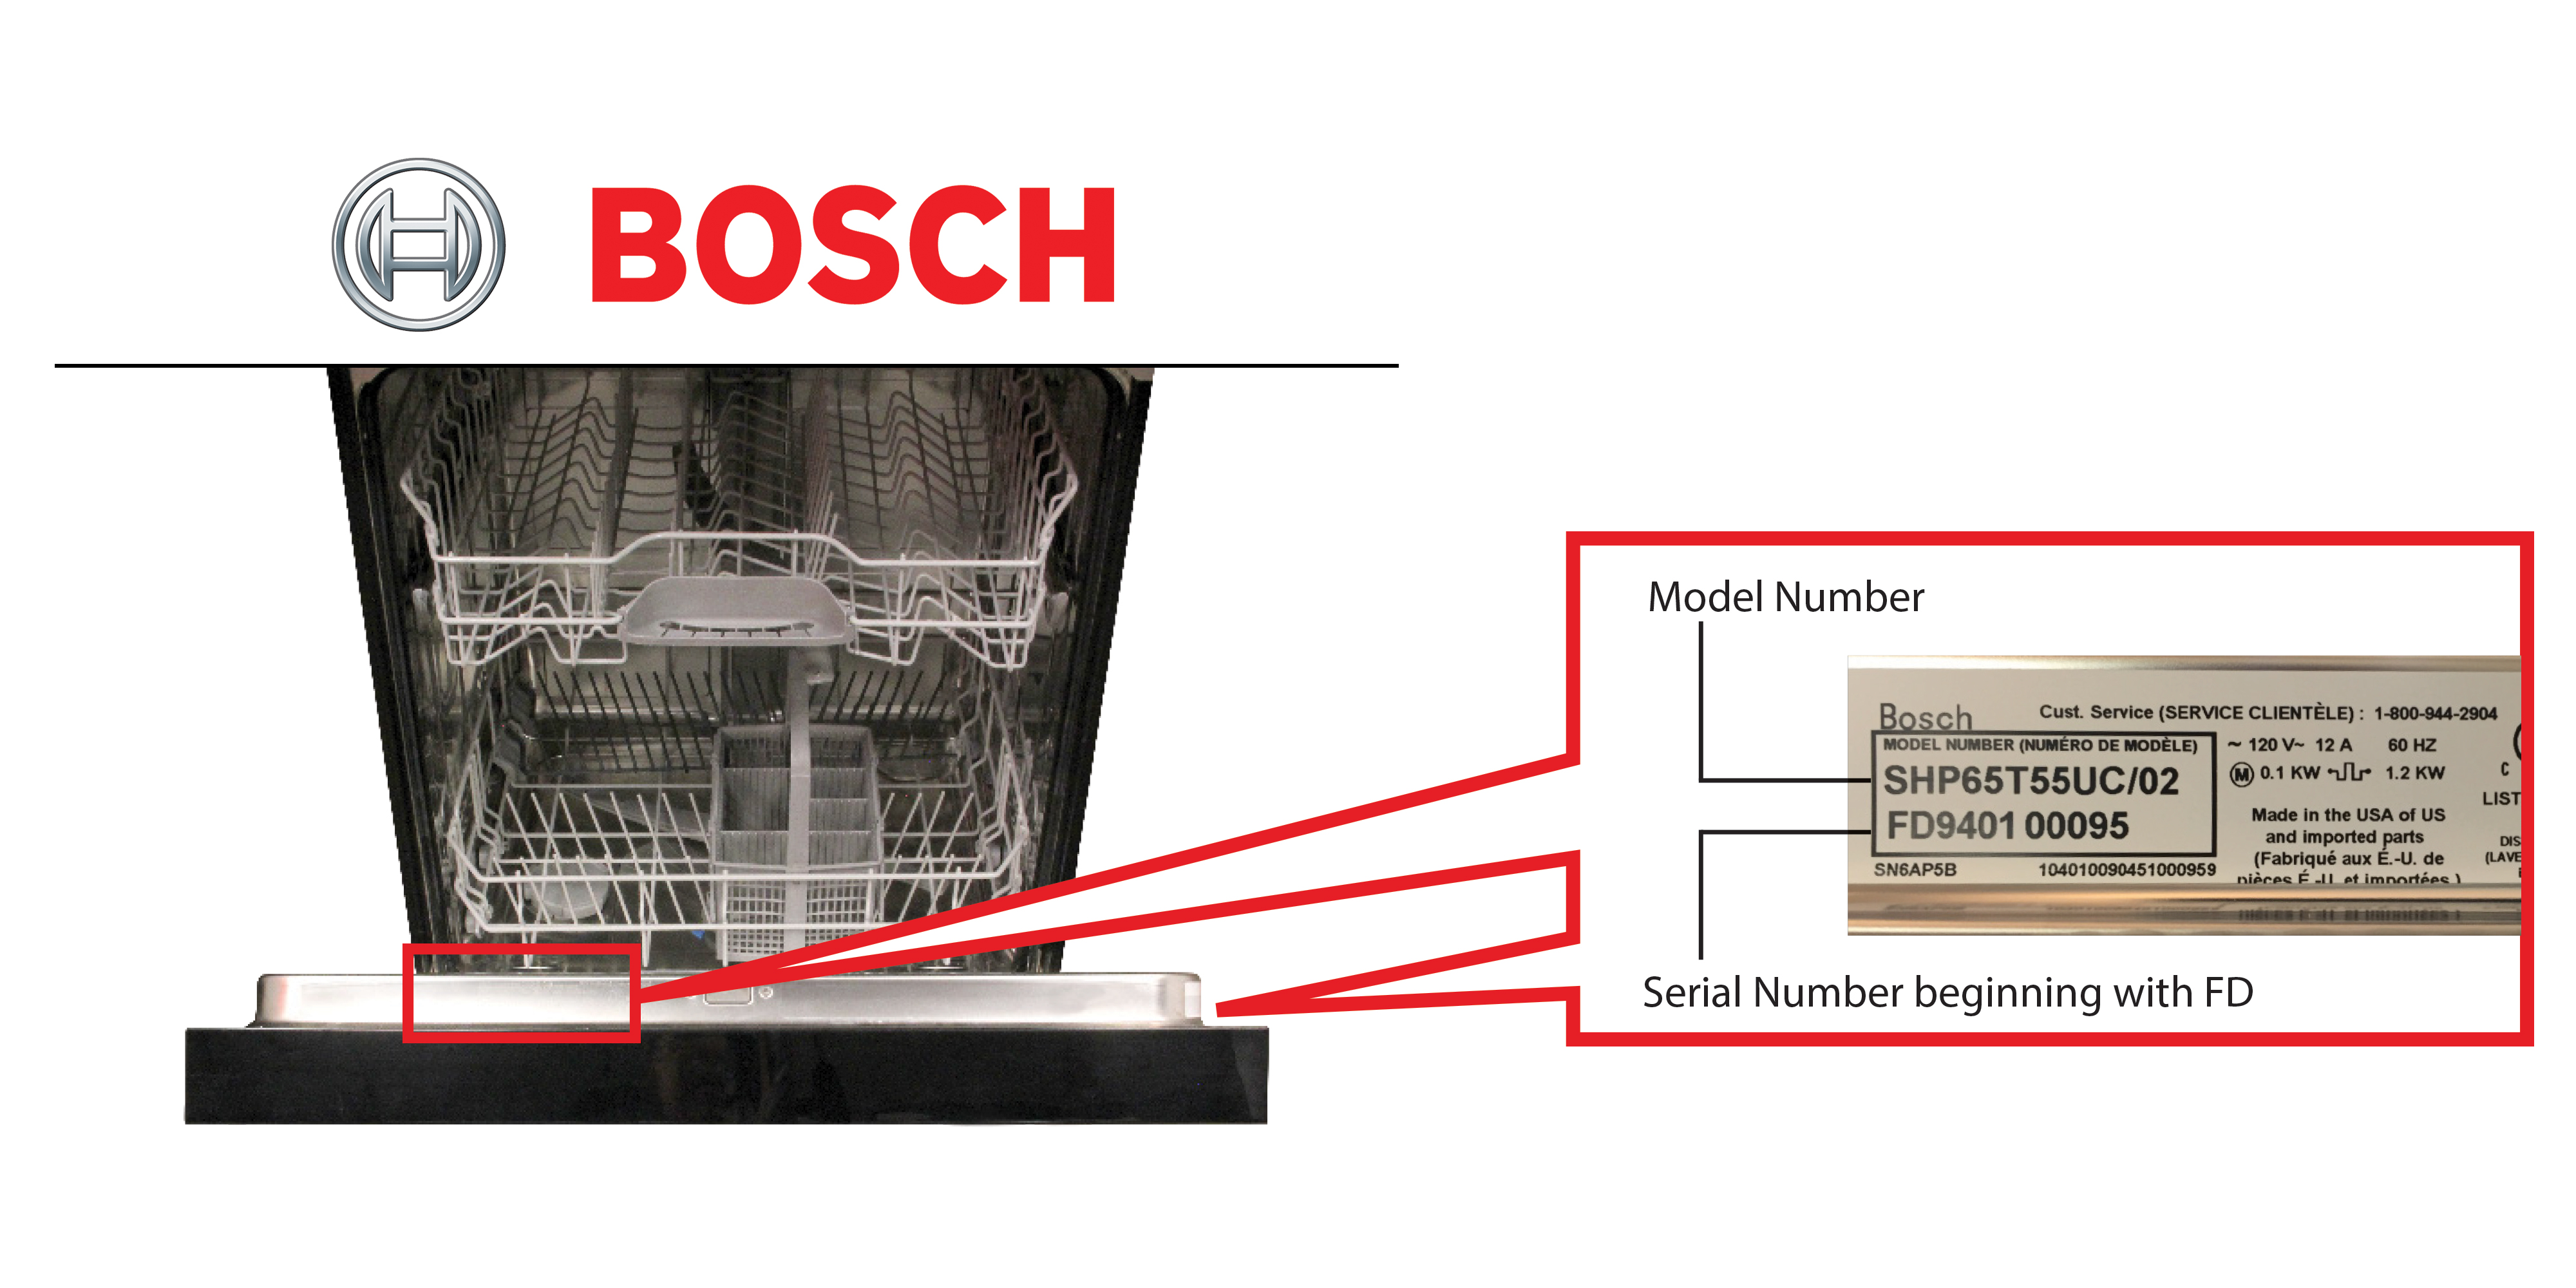 Quiet & Energy Efficient – Bosch